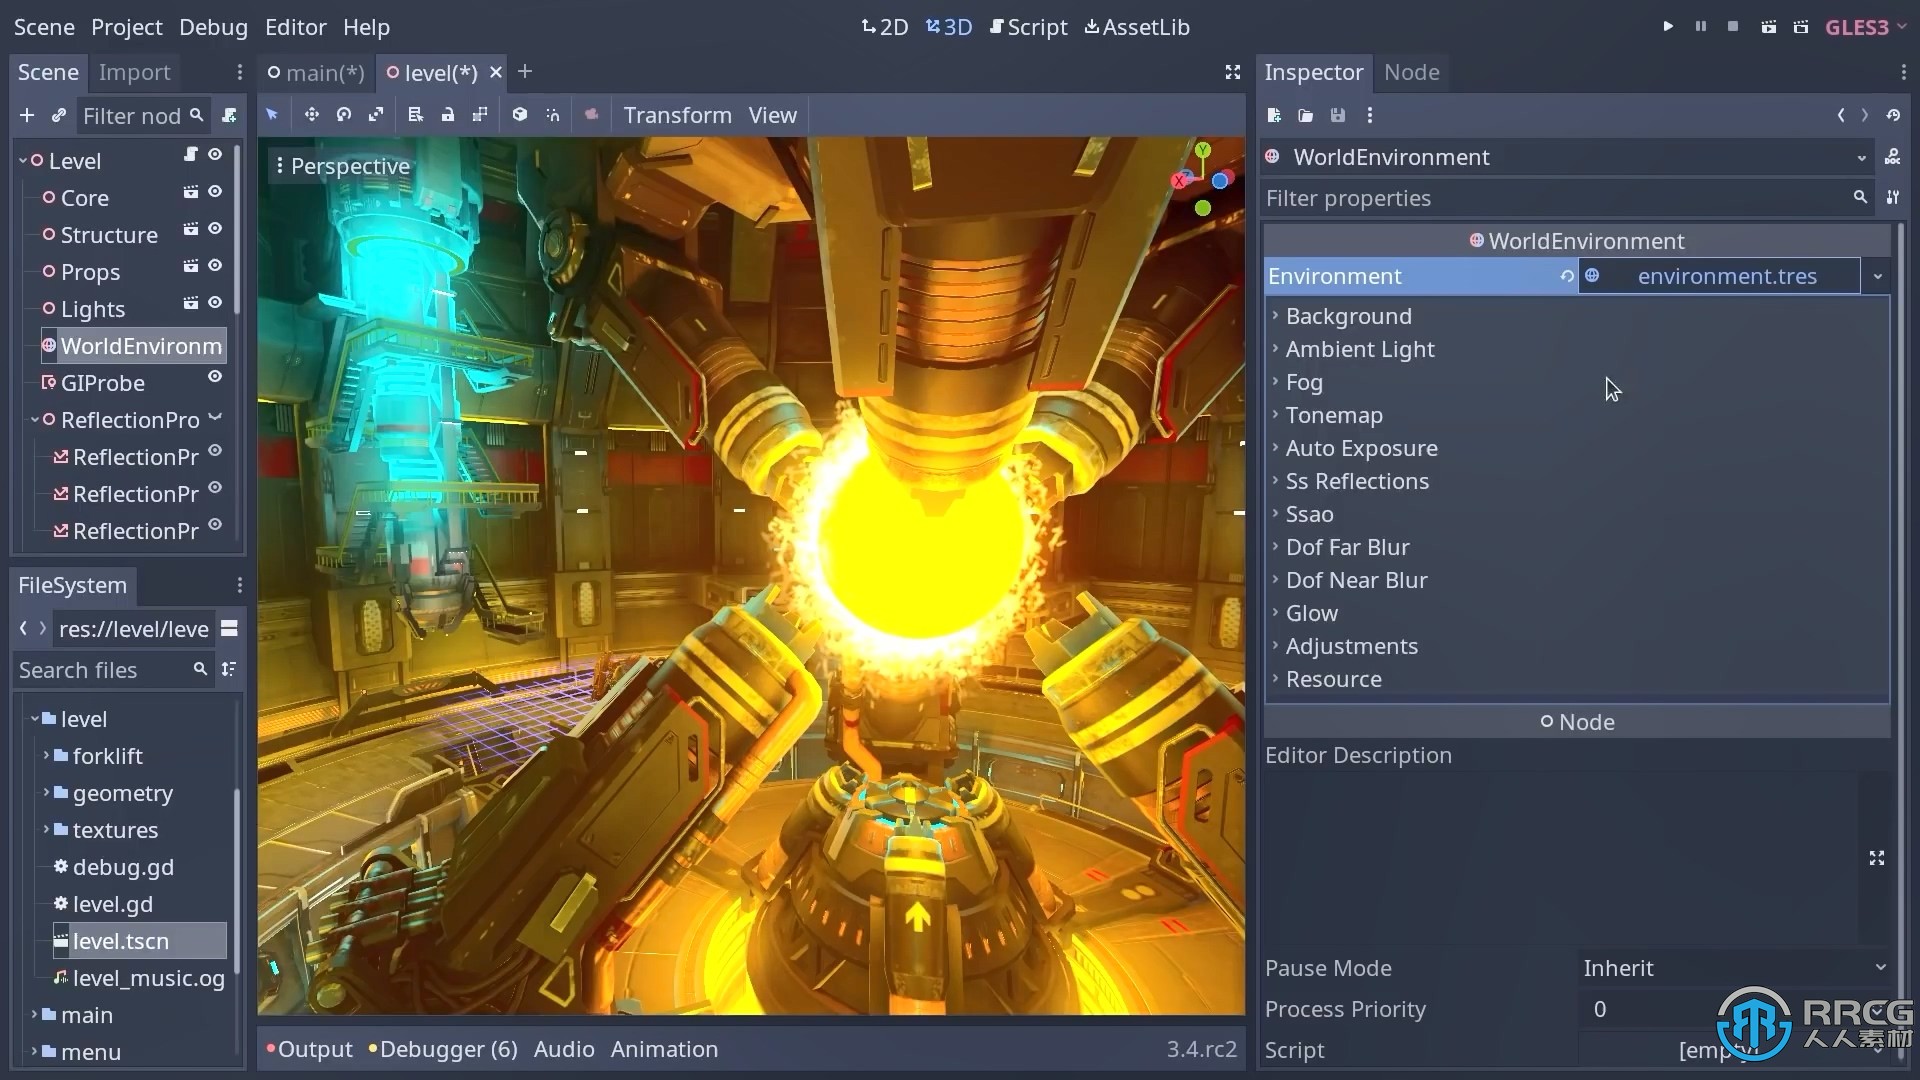 Godot团队发布了Godot 3.4版游戏引擎 更新了新的UI主题编辑器